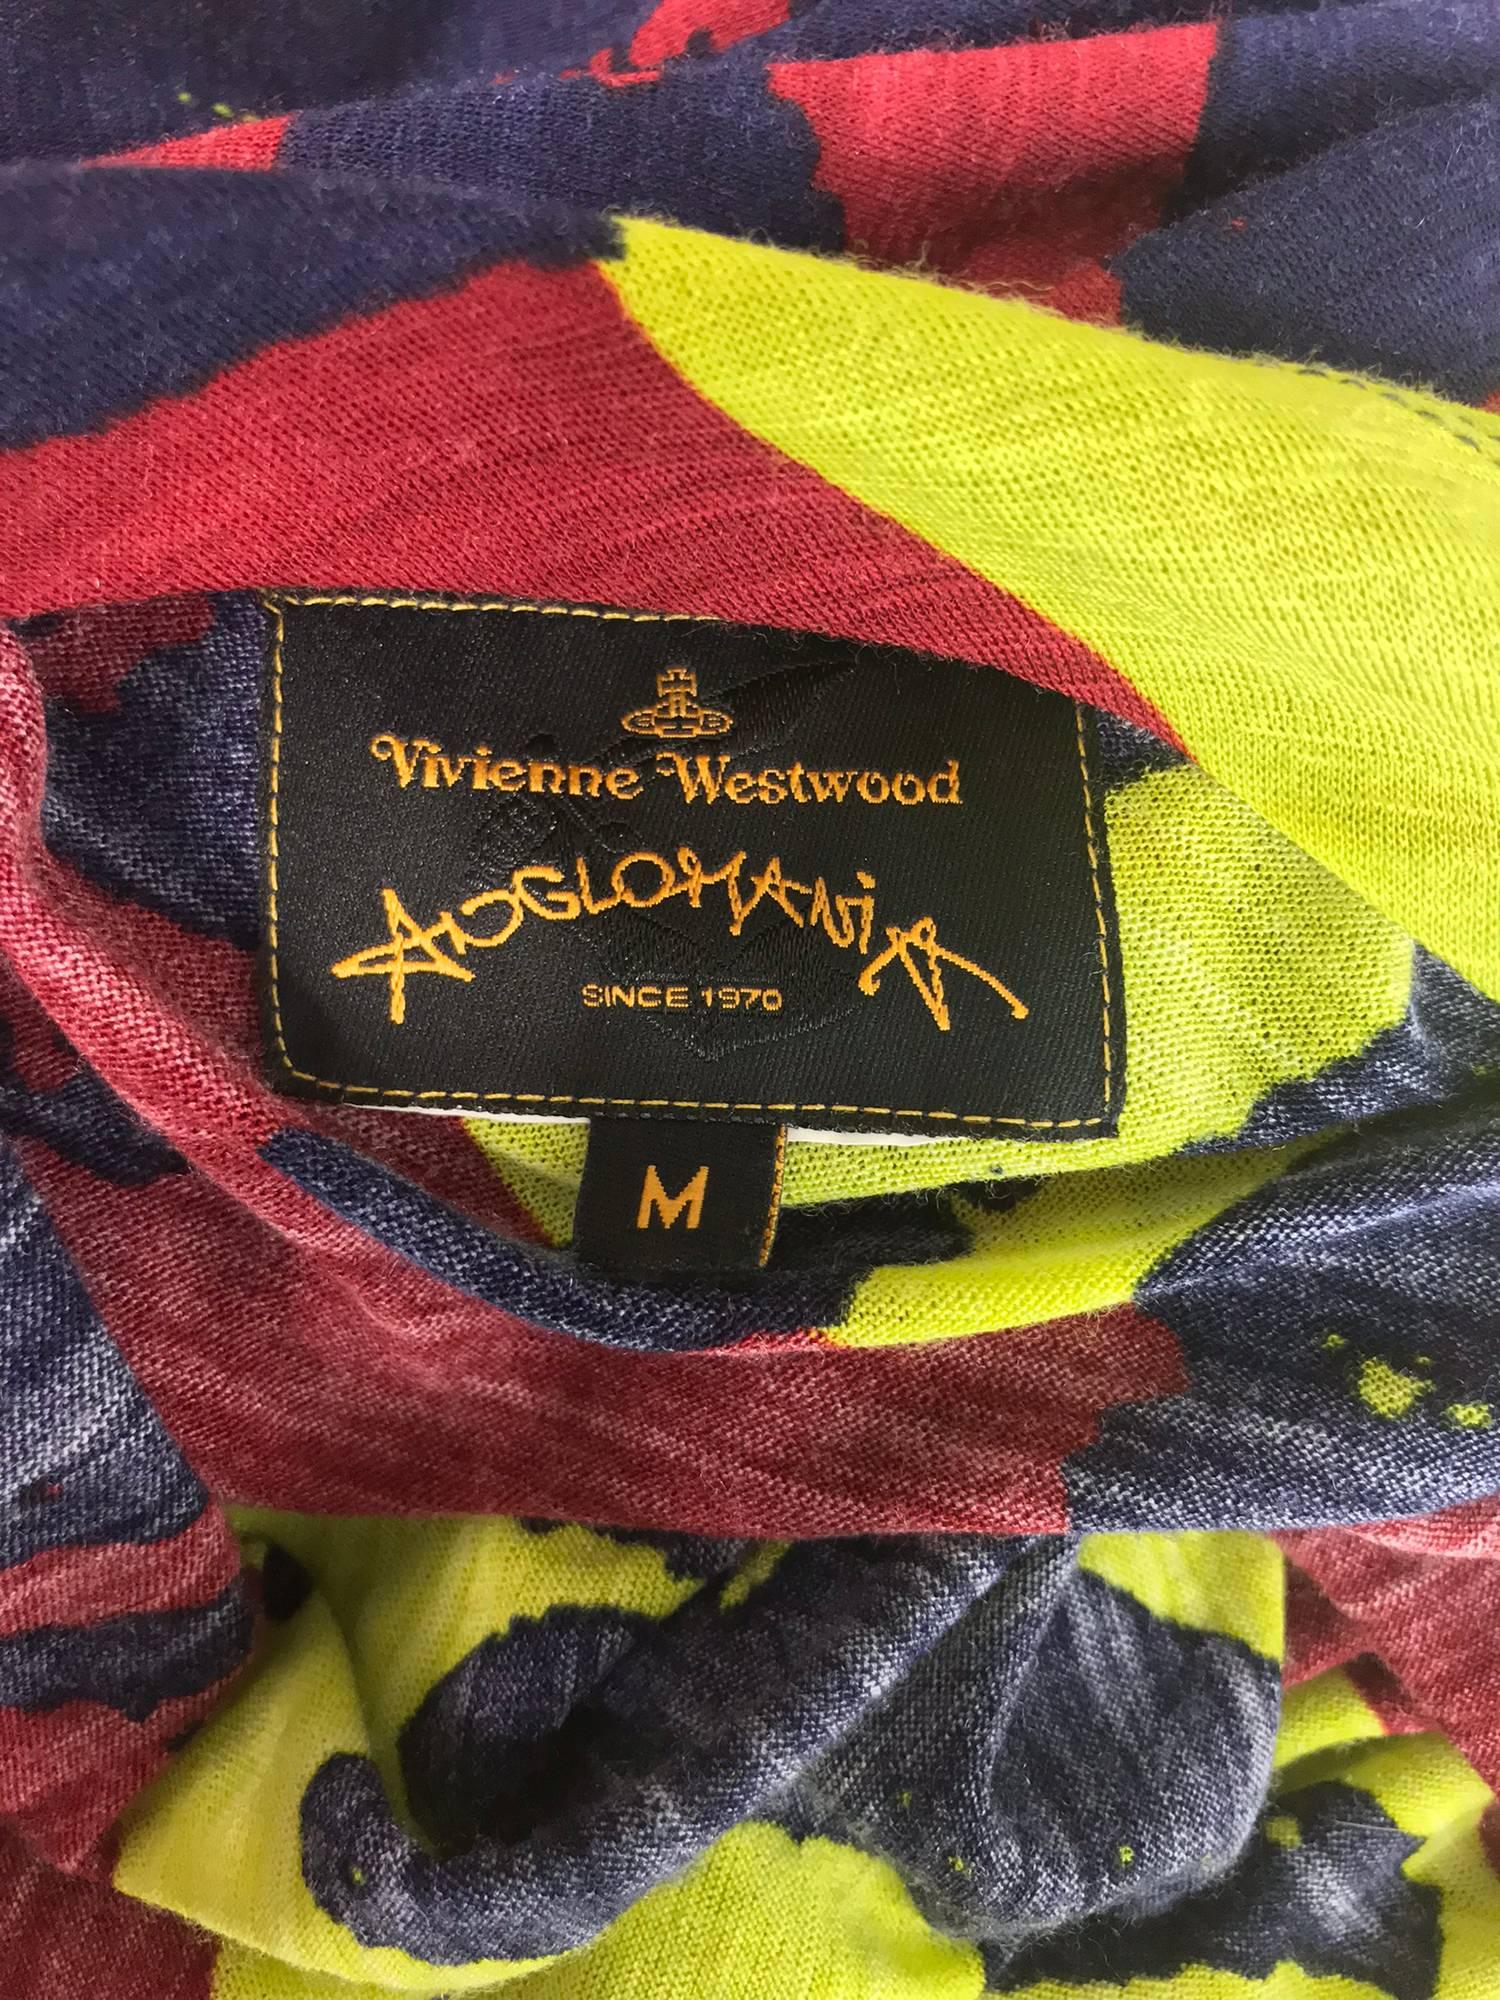 Vivienne Westwood Anglomania asymetrical print knit jersey dress 3